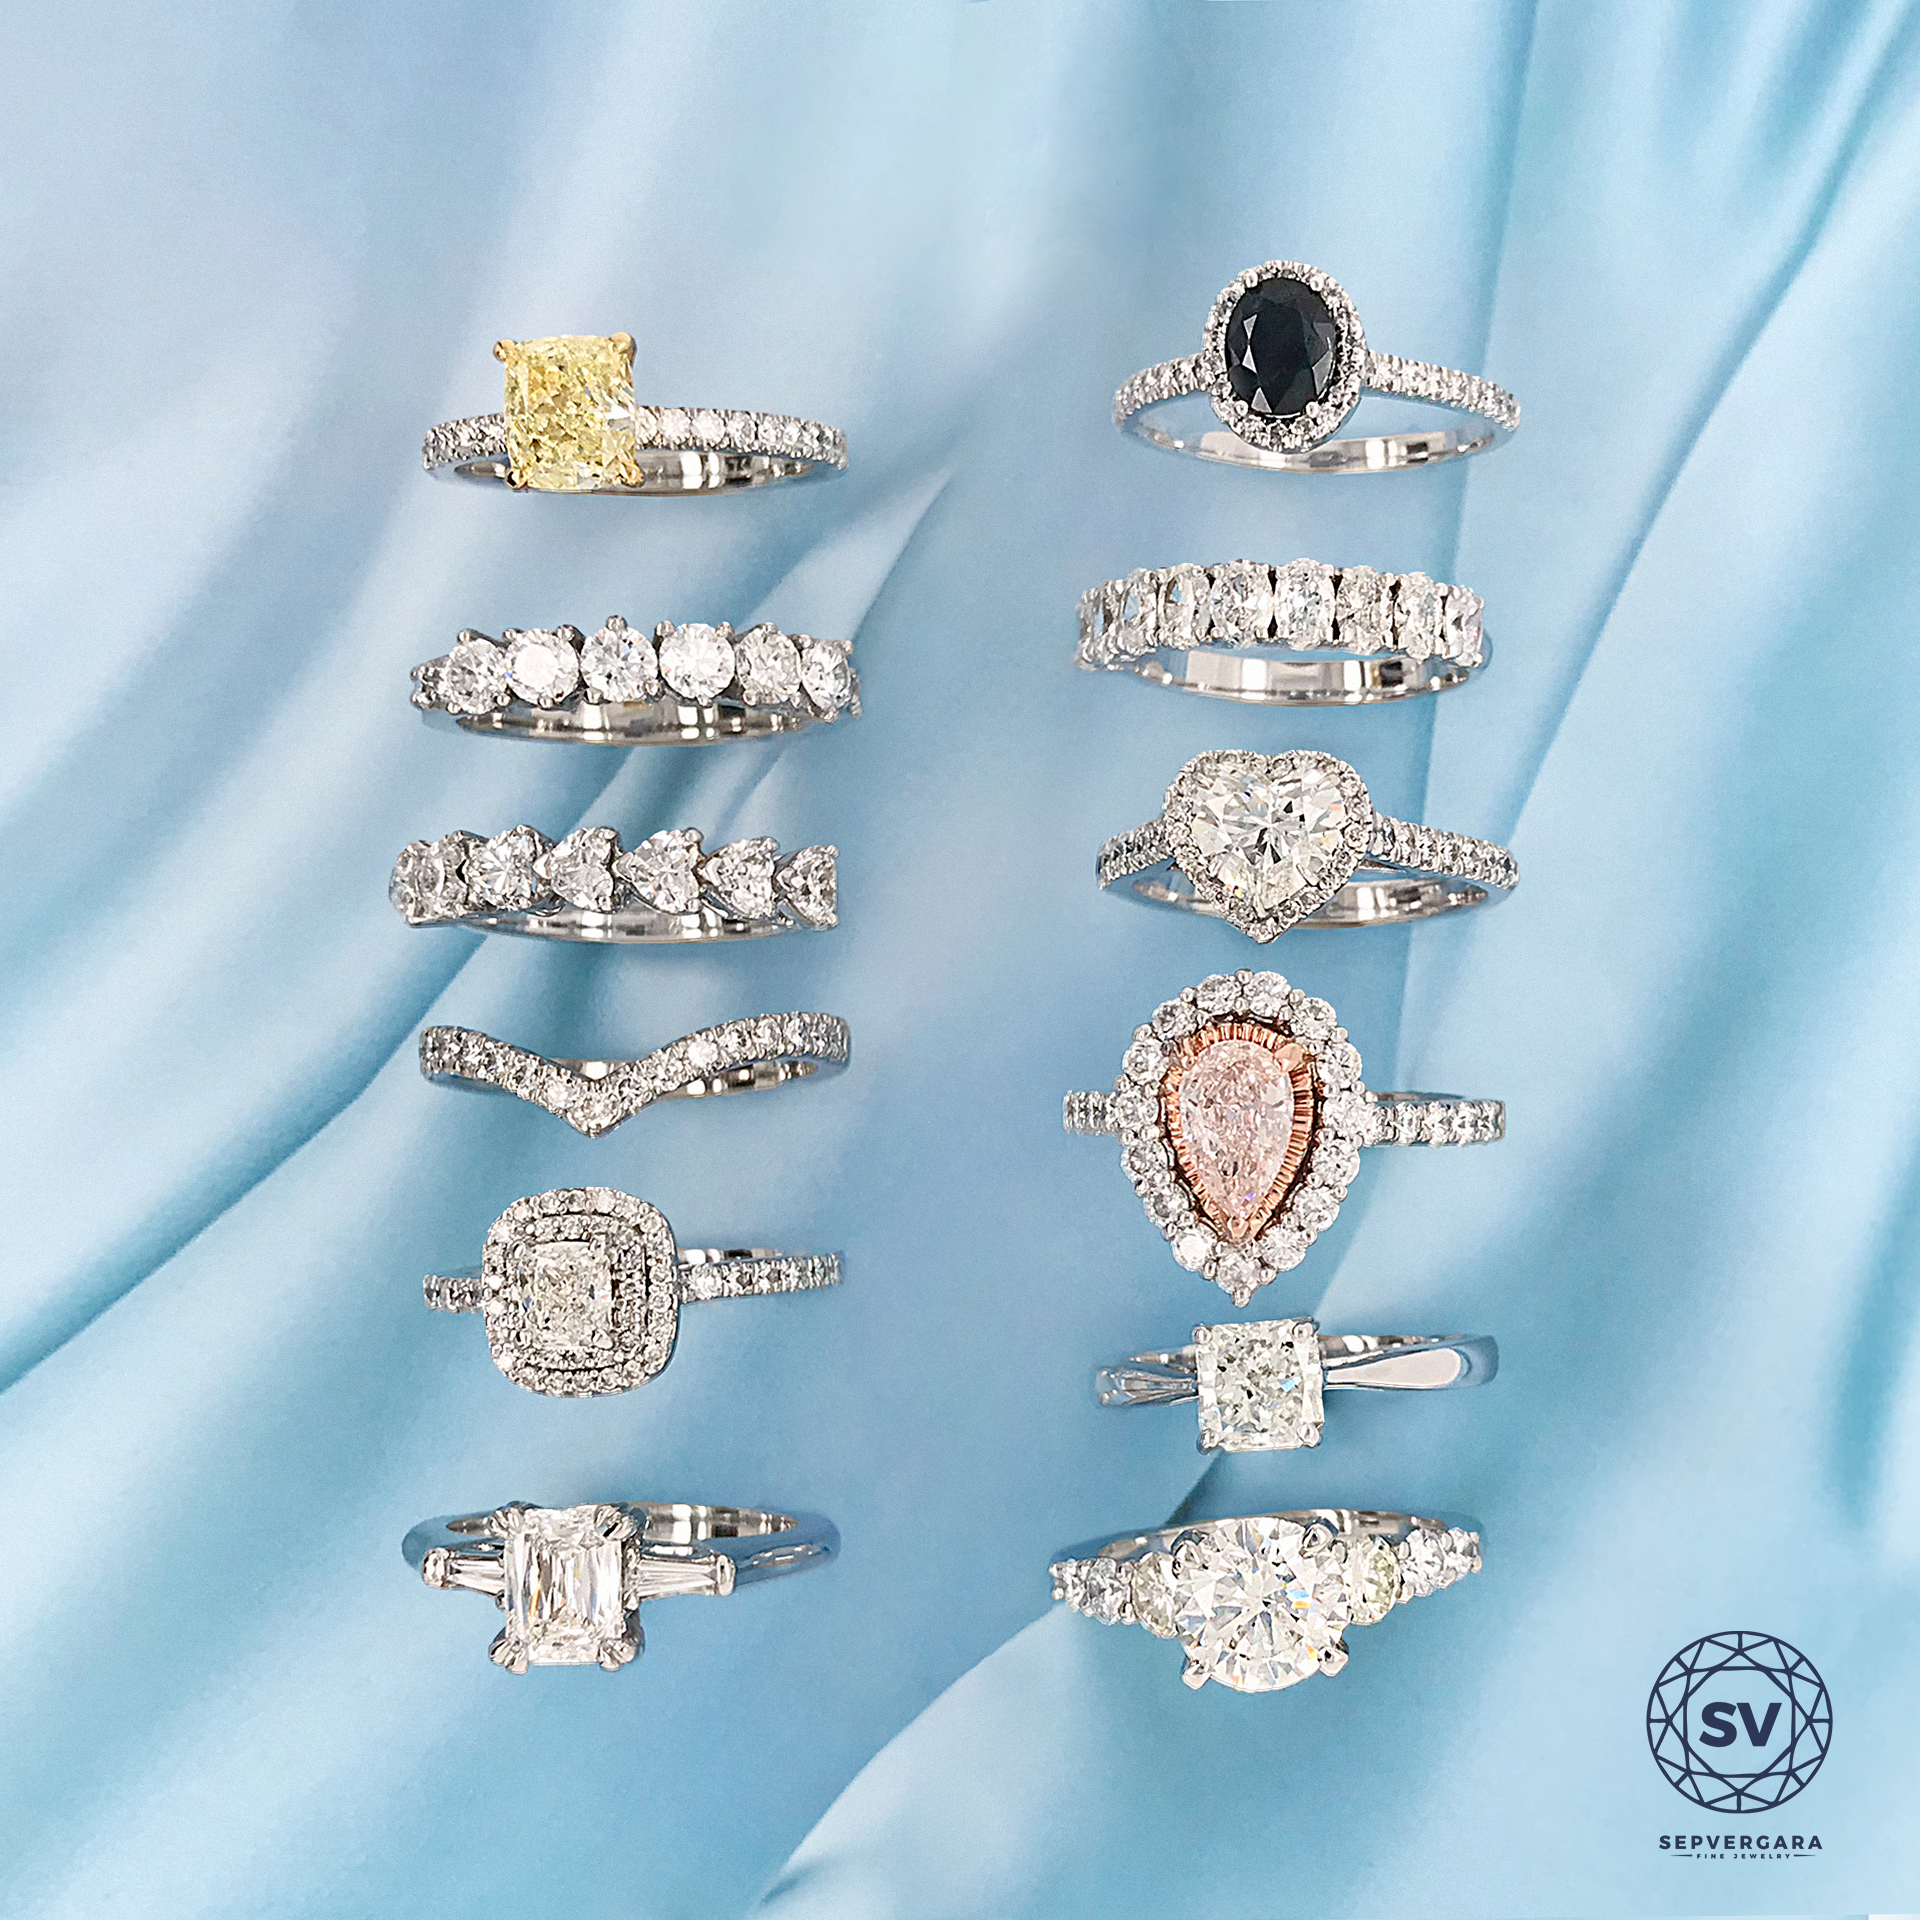 Sep Vergara Platinum Jewelry Engagement Ring Collection